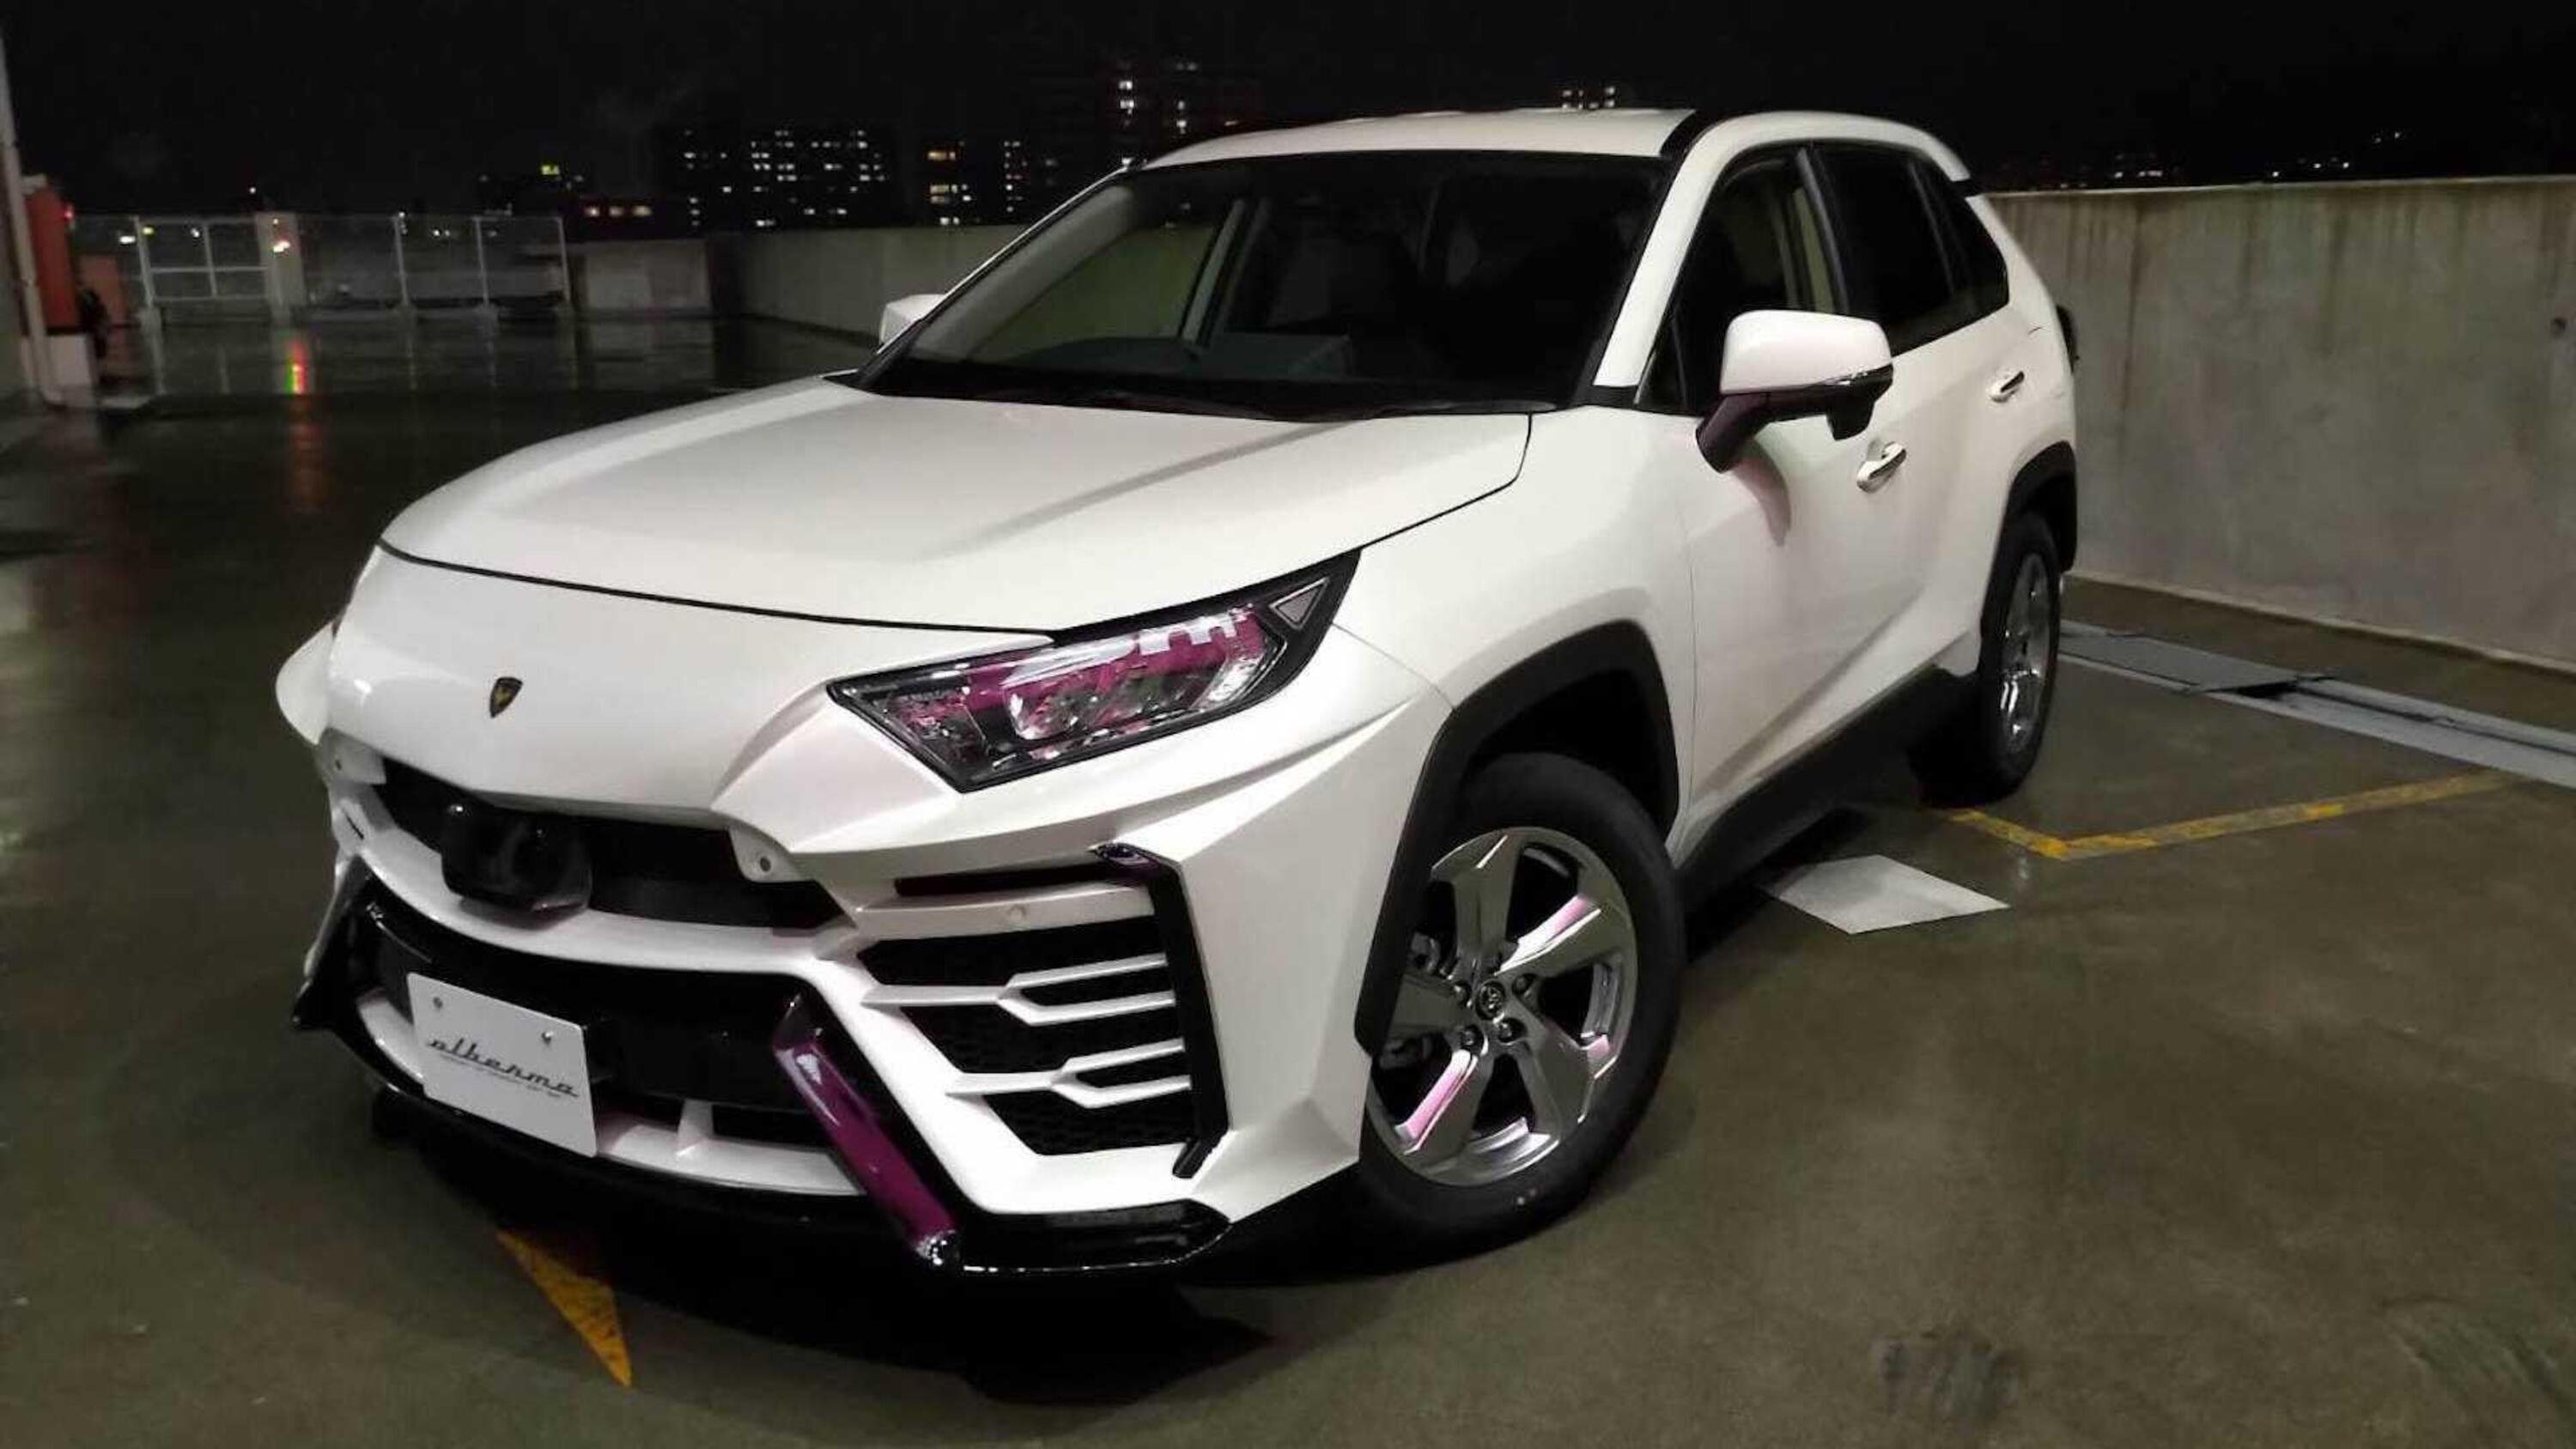 Toyota RAV4, il kit per renderla simile alla Urus